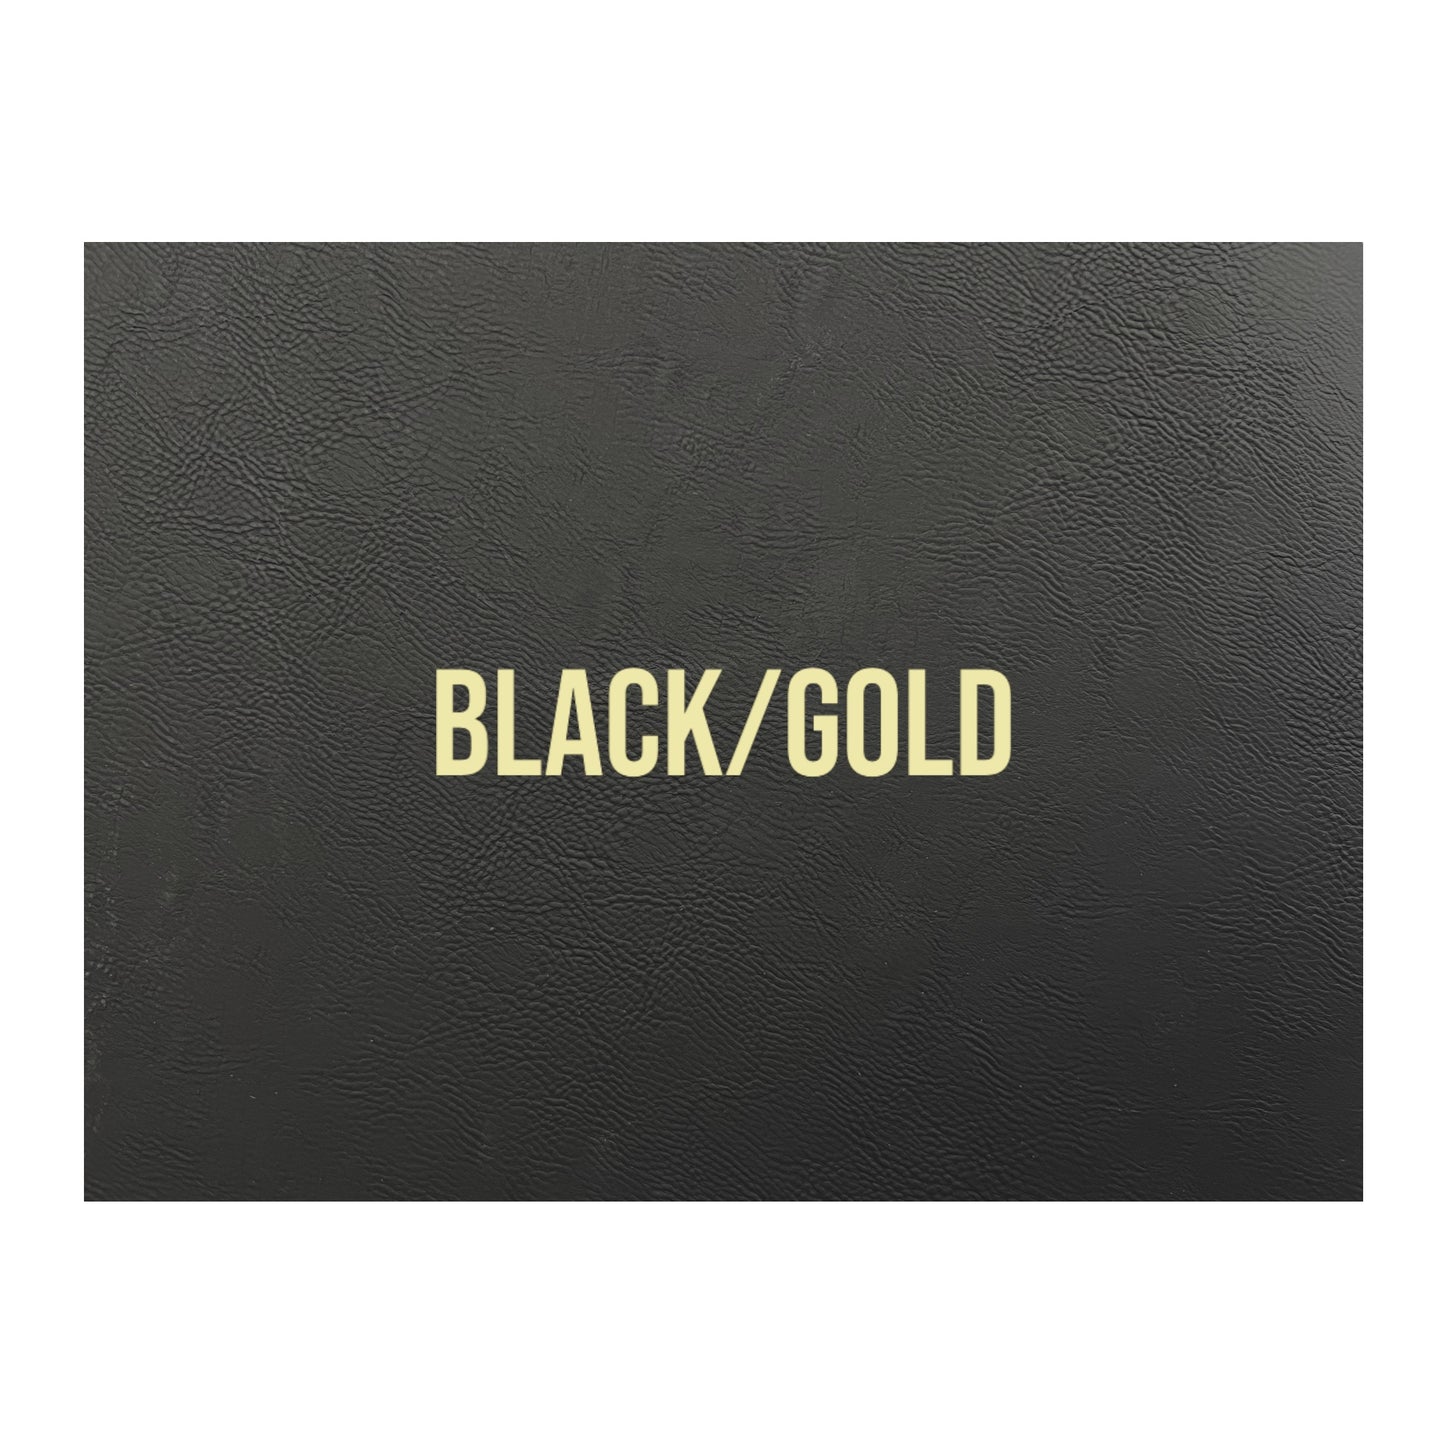 BLACK/GOLD HYDBOND LEATHERETTE SHEET (12"x24")